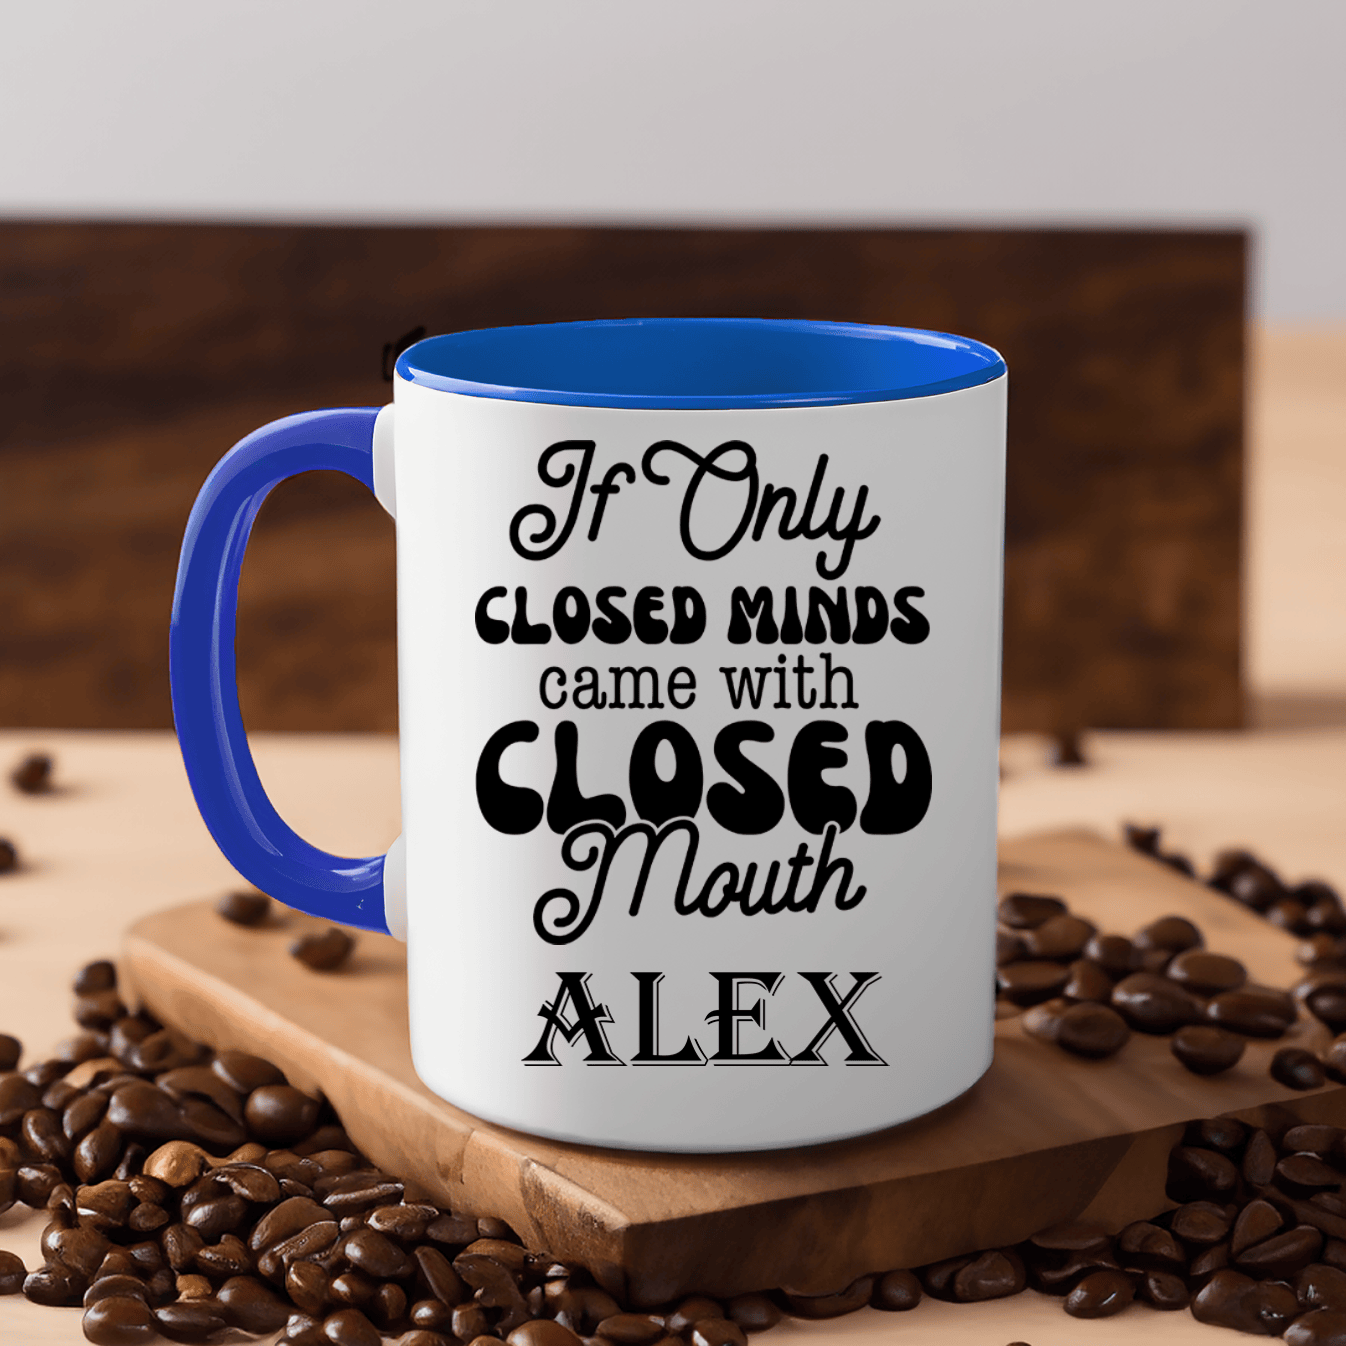 Blue Funny Coffee Mug With Close Your Mouth Design